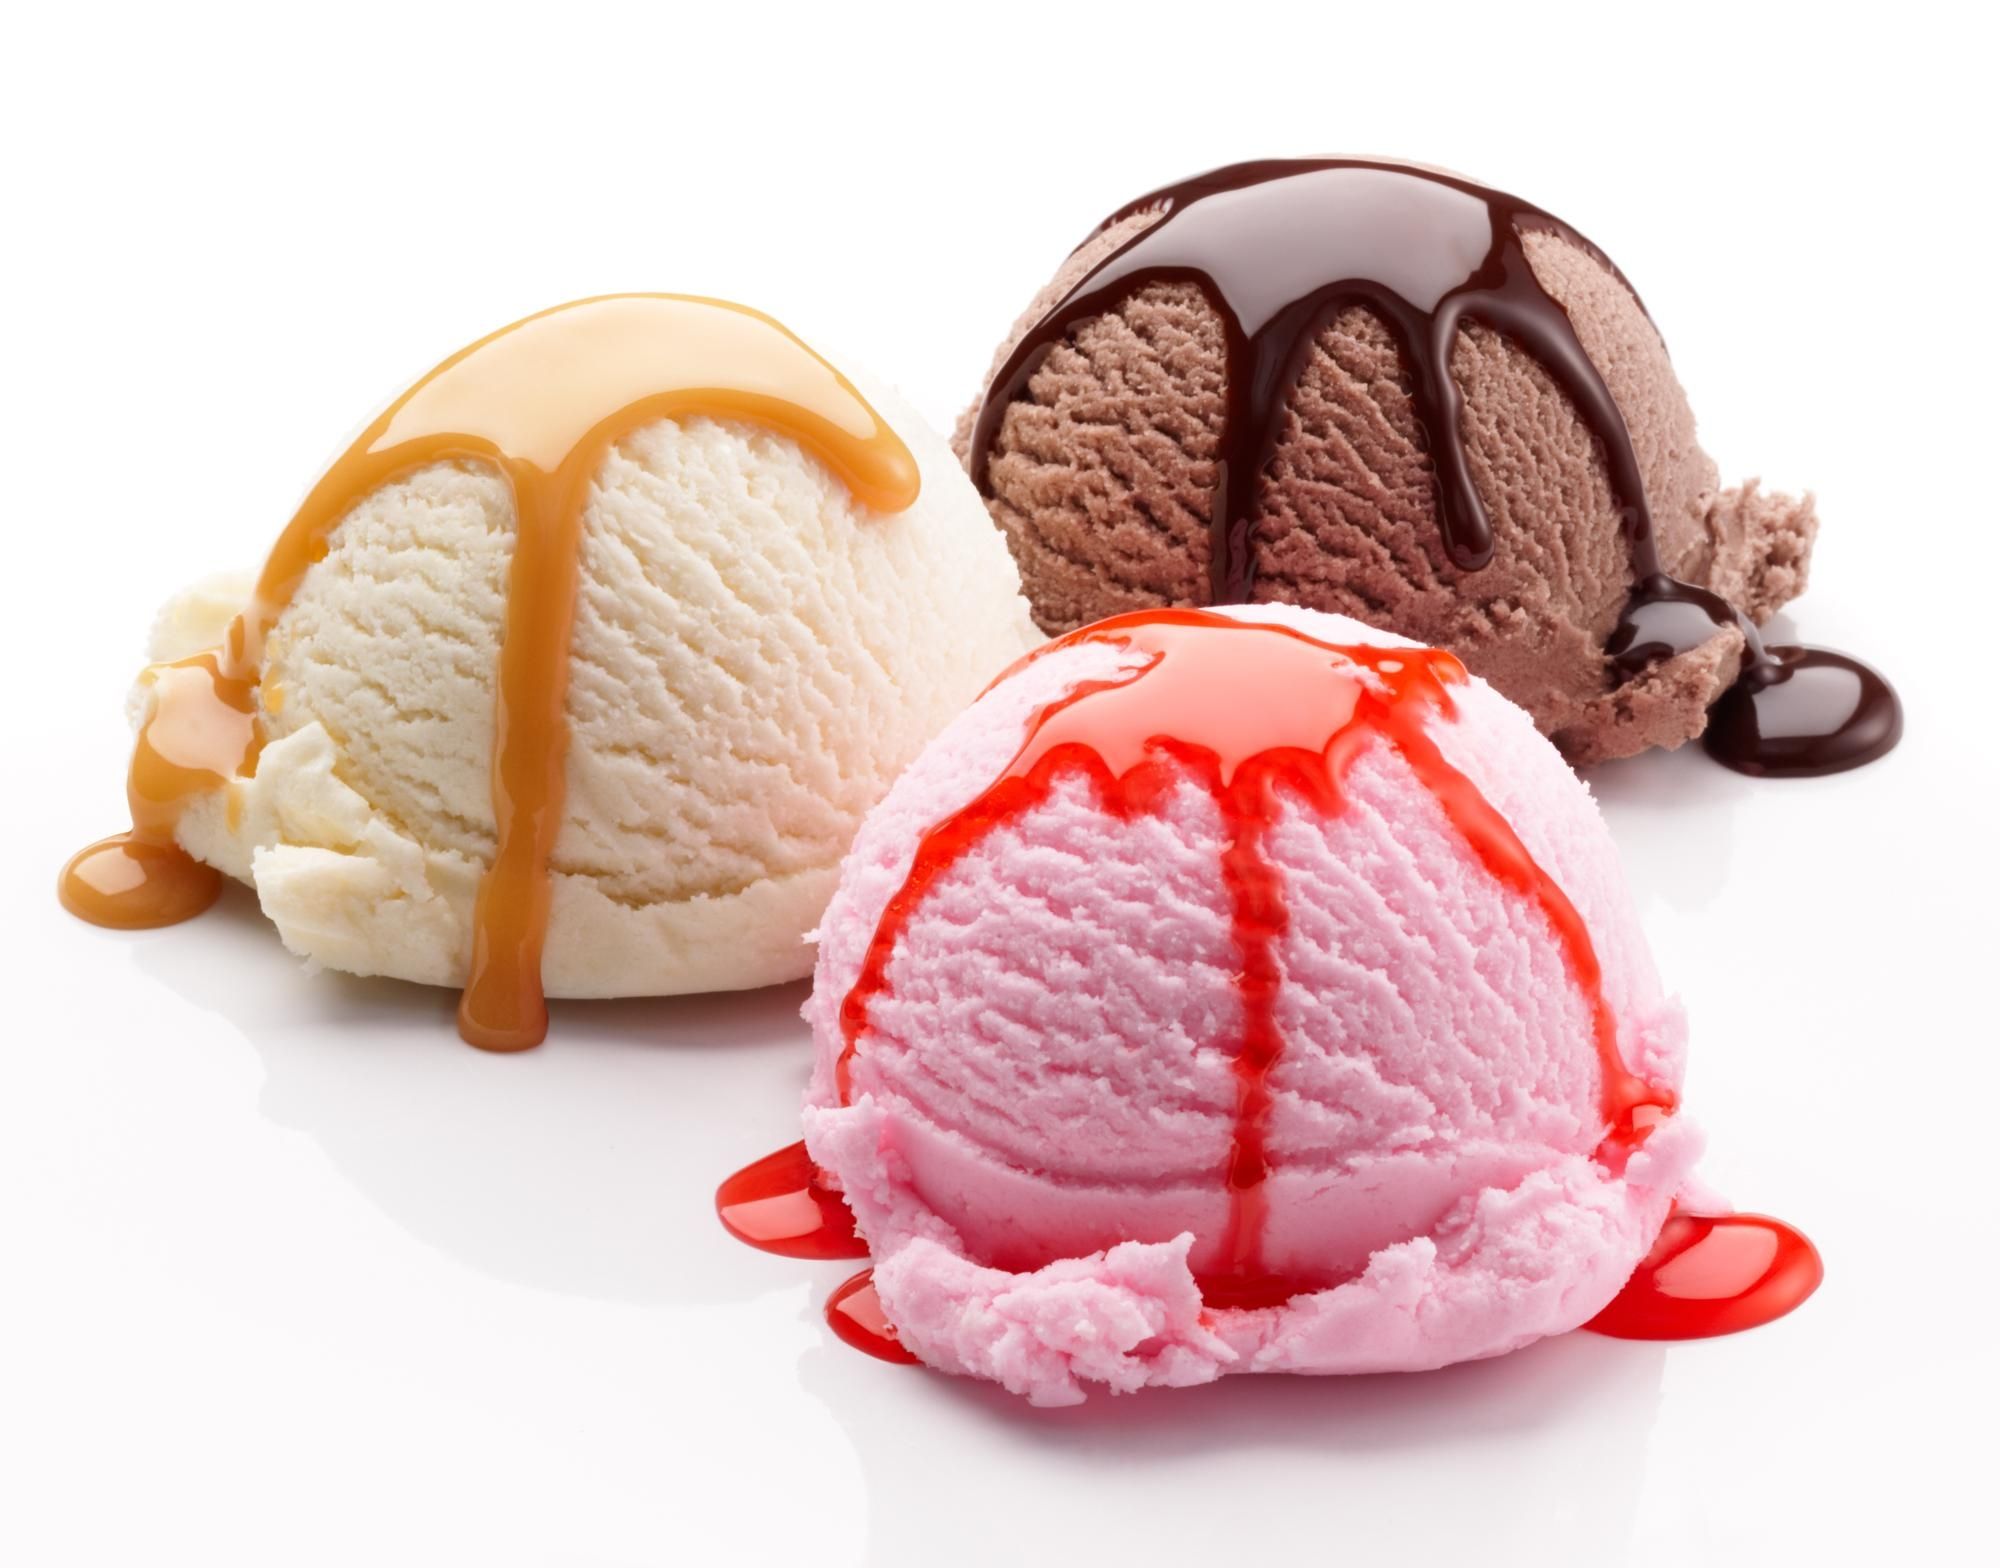 Ice cream dream meaning, dreamabout ice cream, ice cream dream interpretation